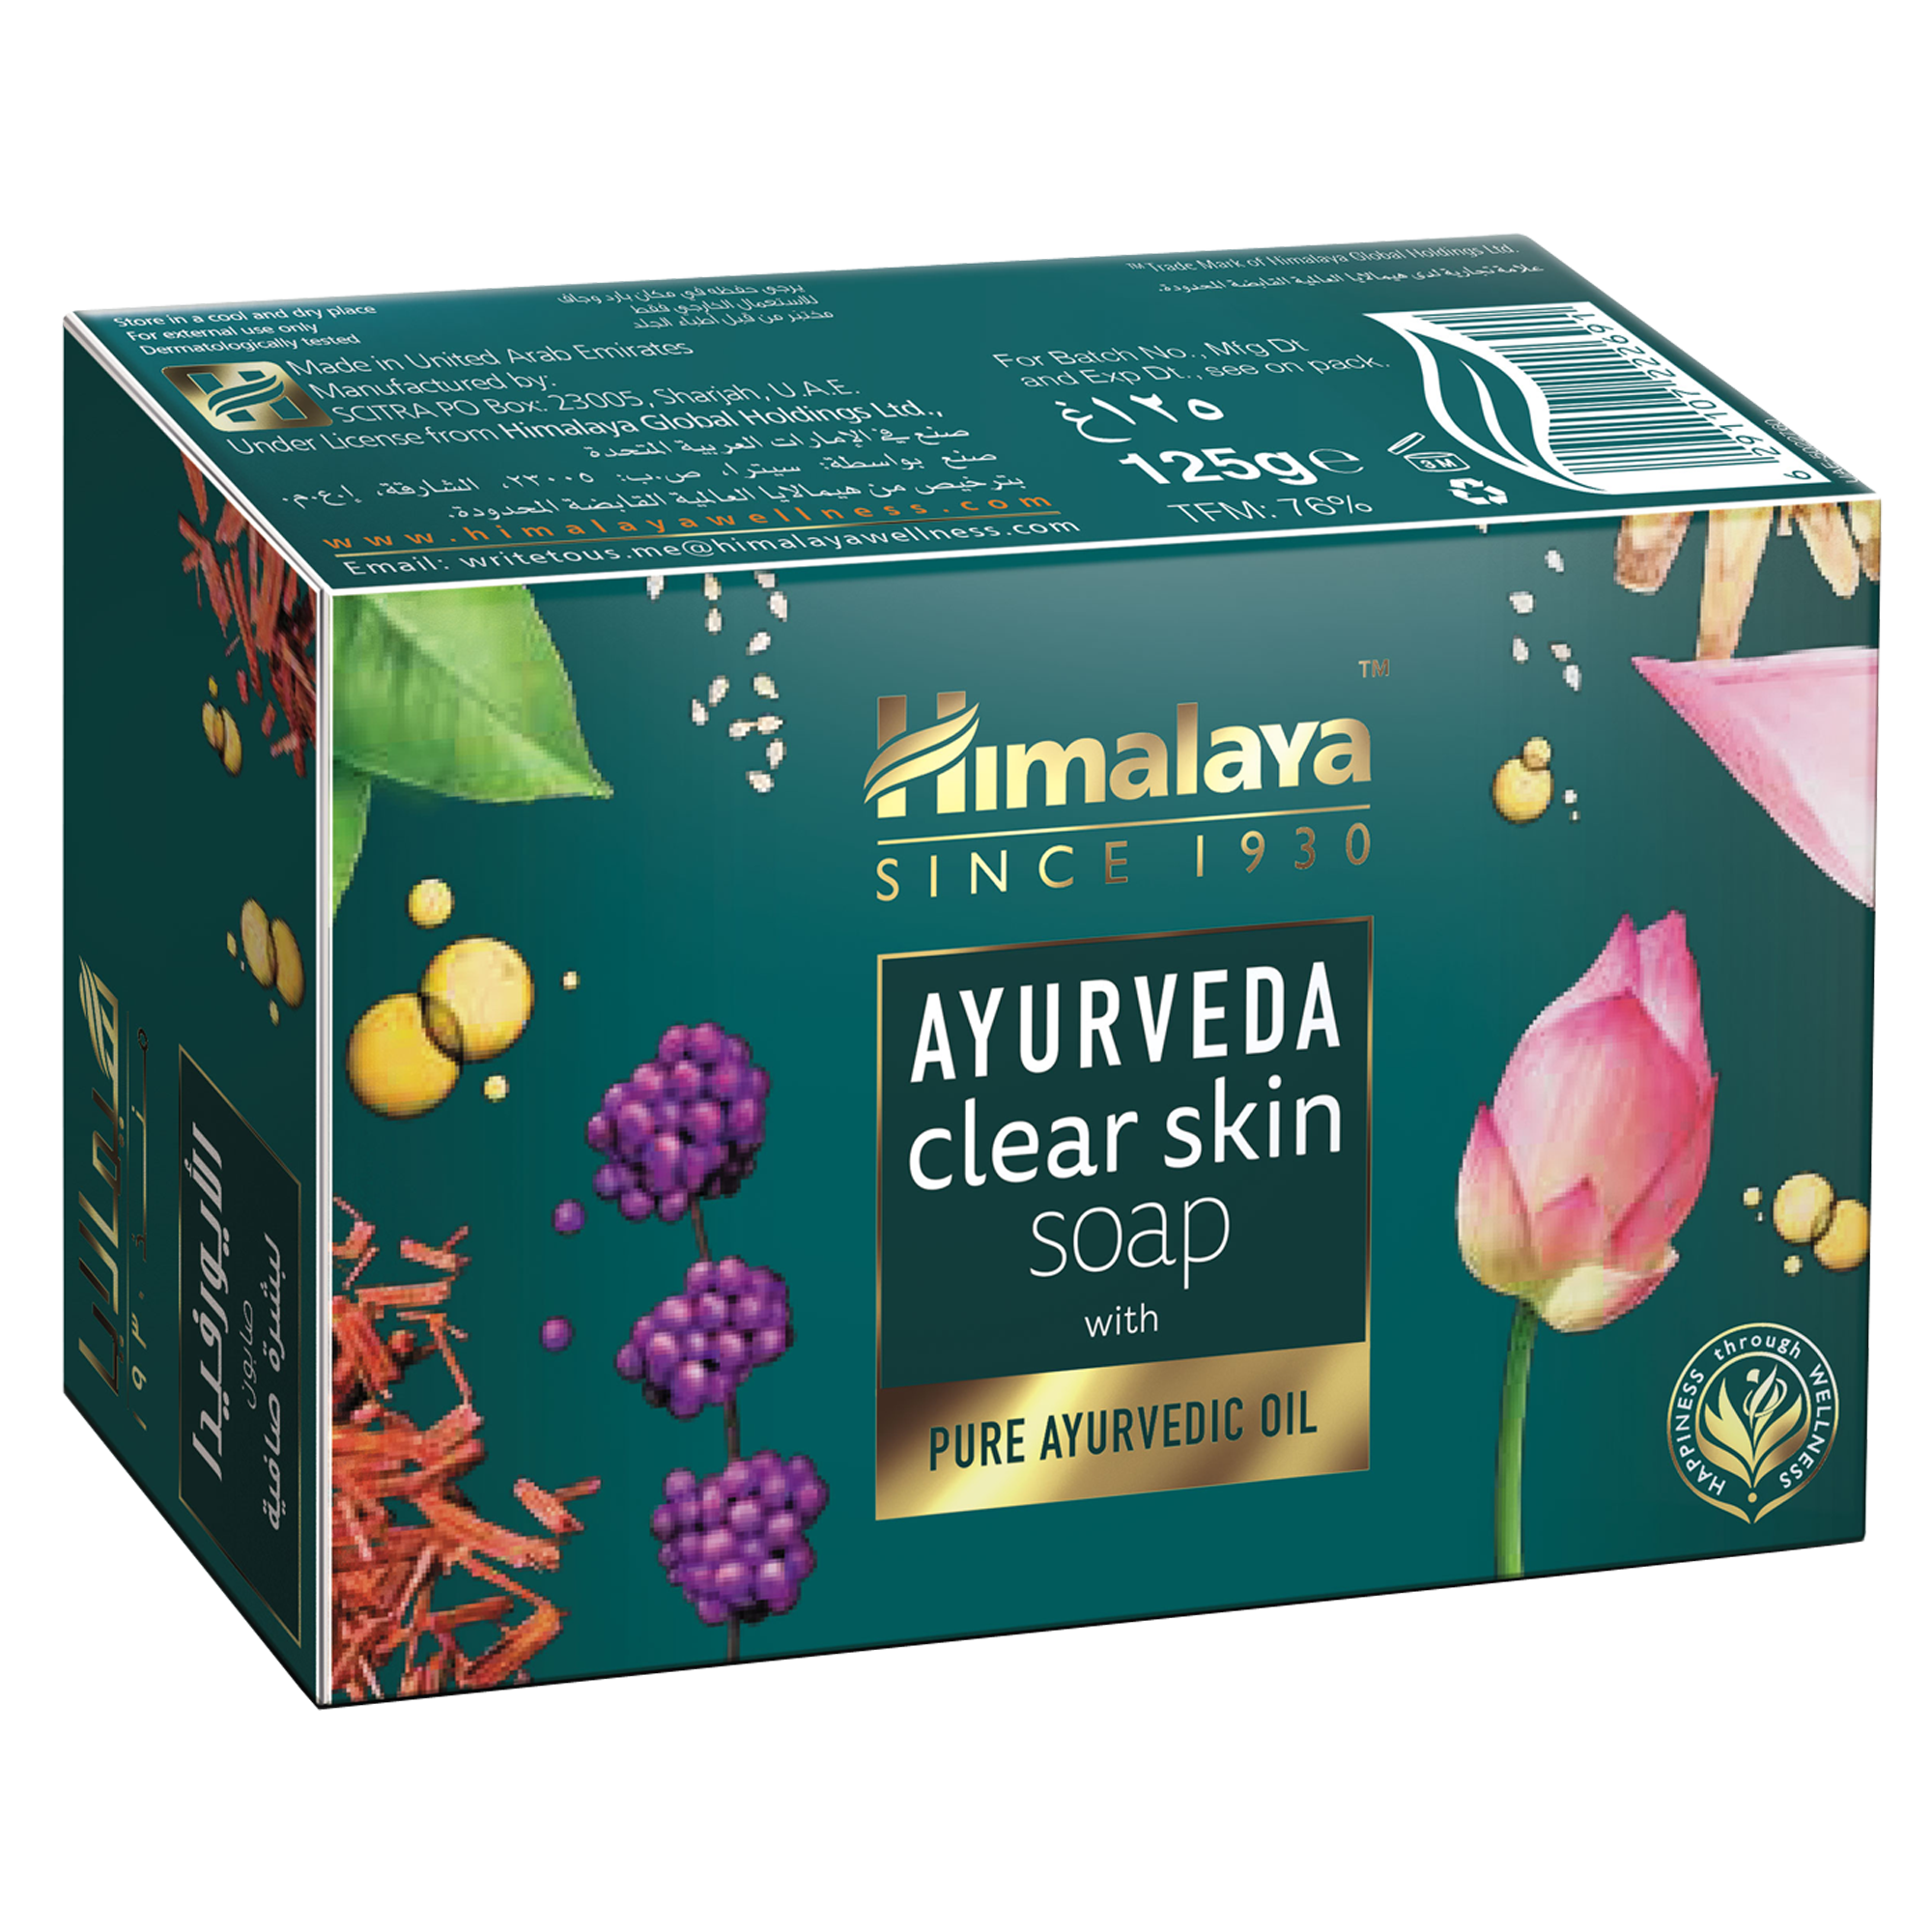 Himalaya Ayurveda Clear Skin Soap 125g - Nourishes Skin, Naturally